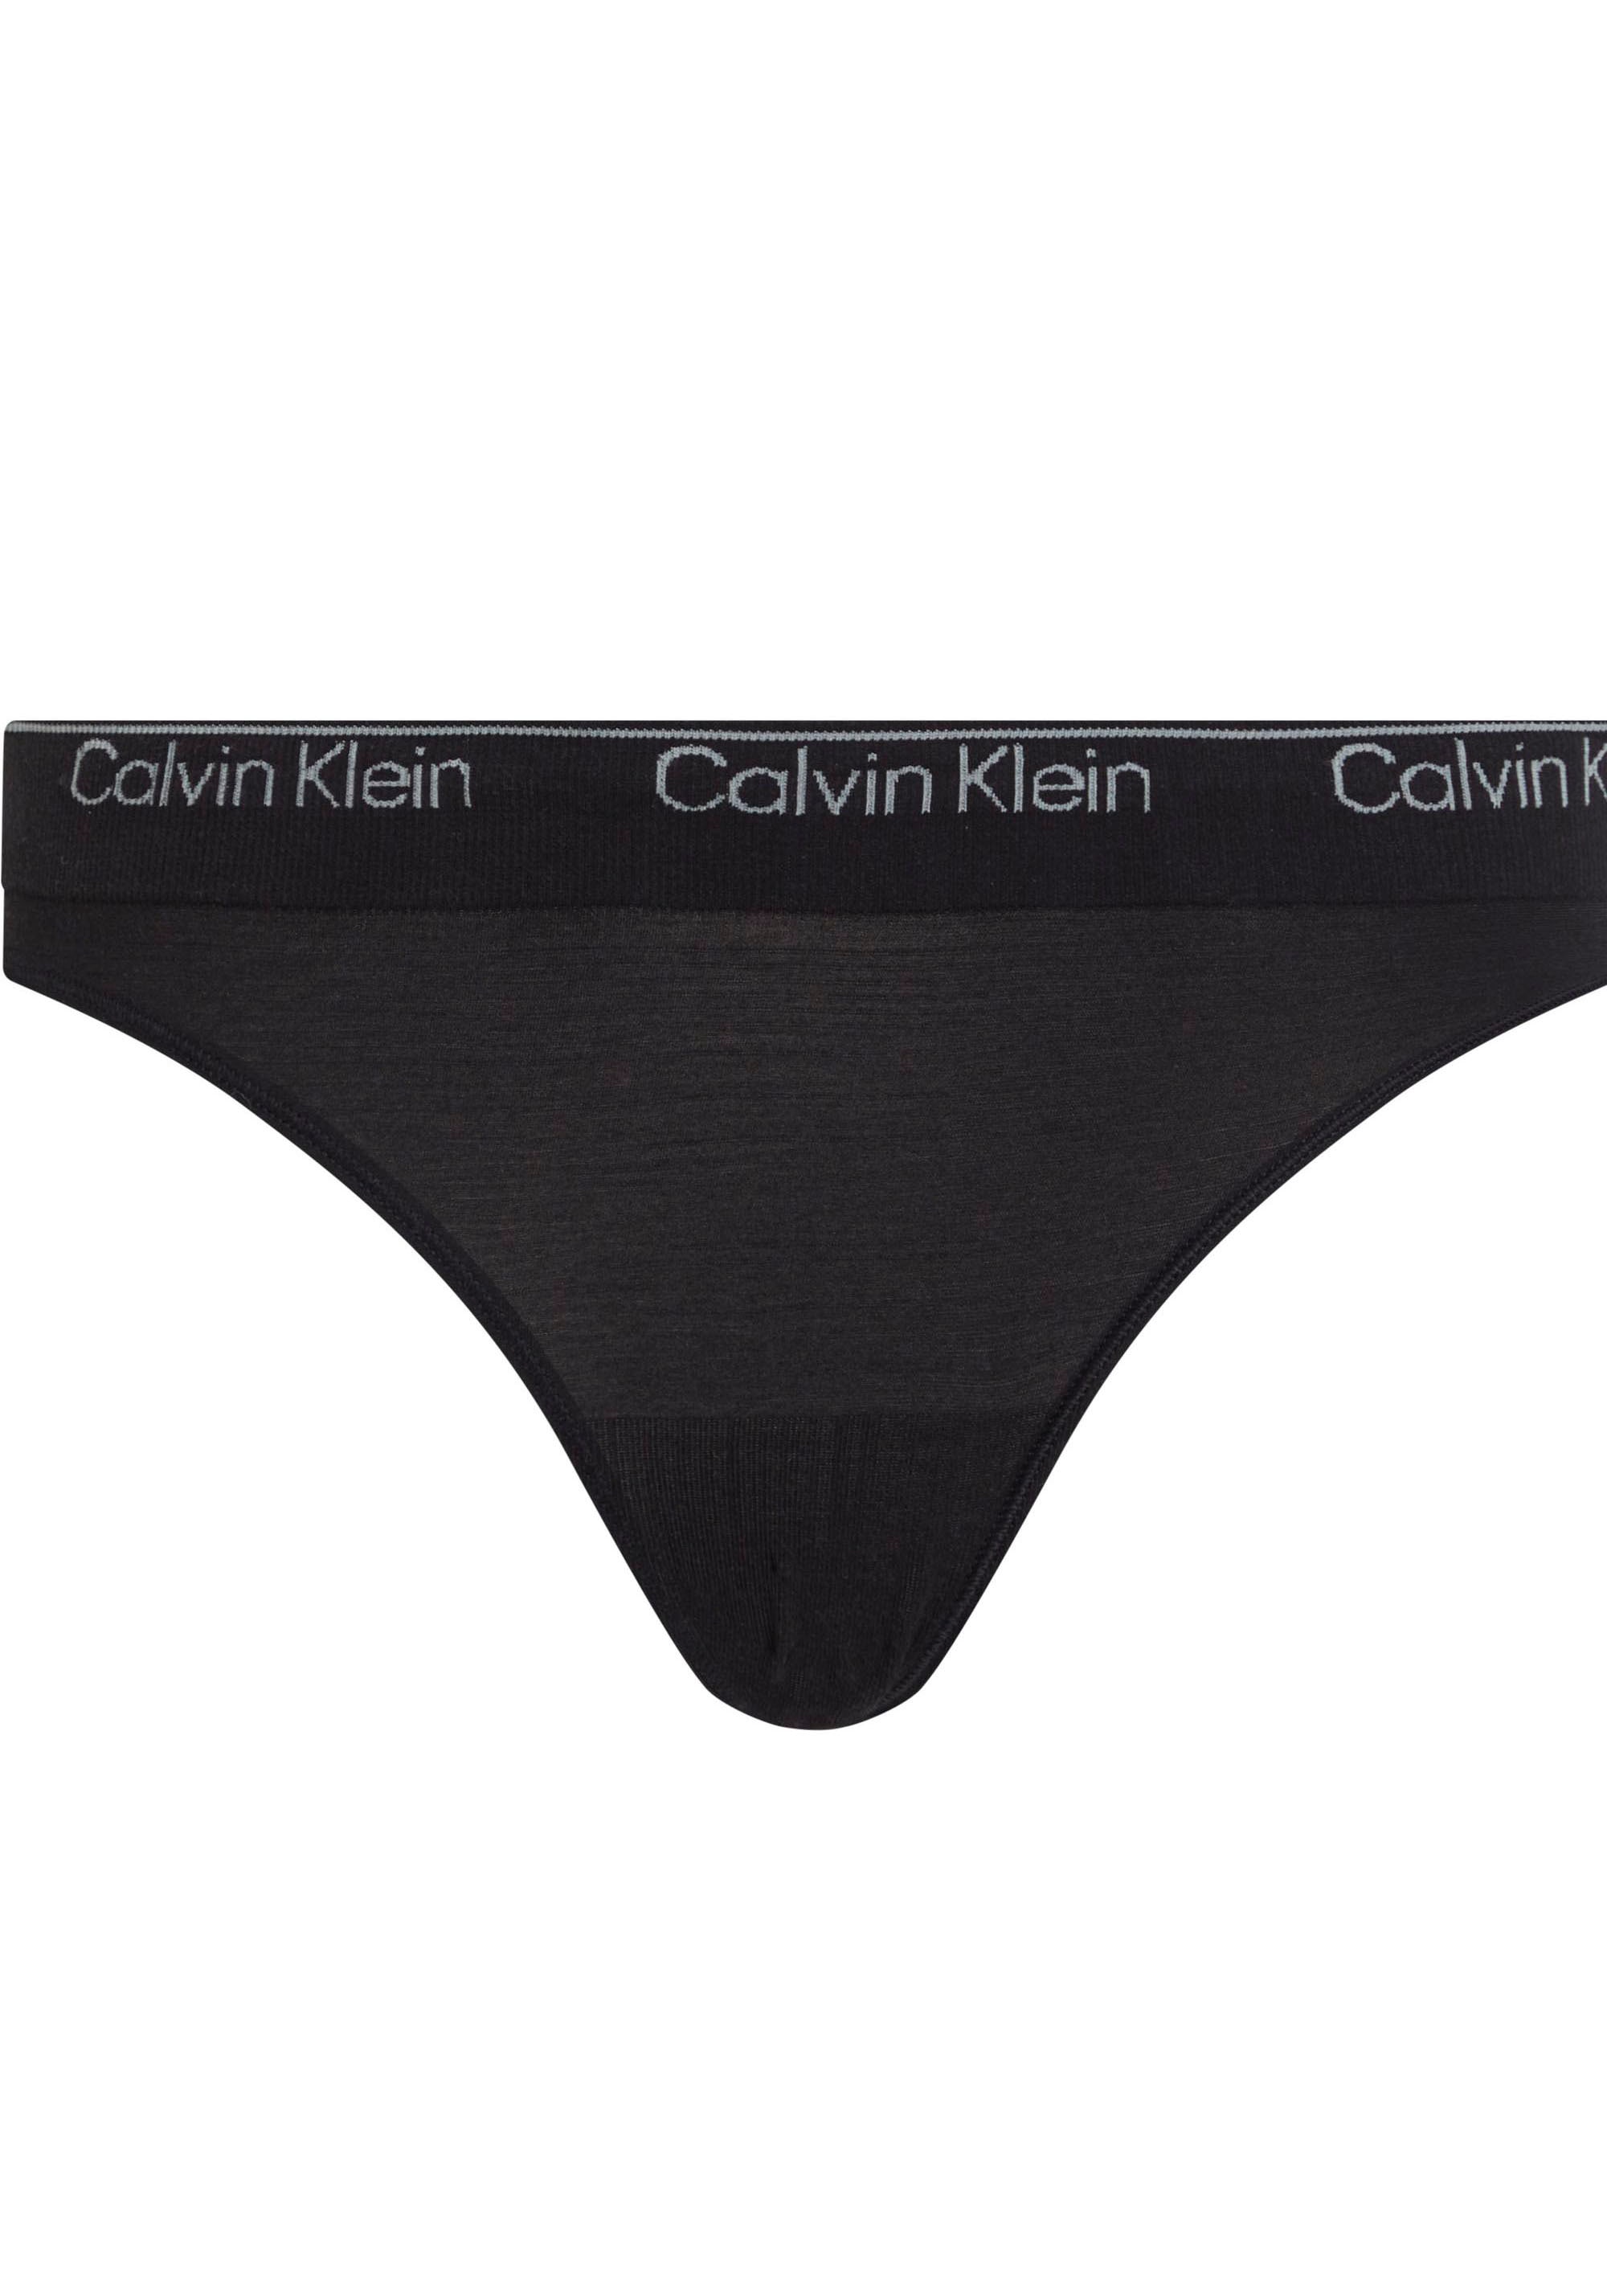 Calvin Klein Bikinislip »BIKINI«, mit Bund bei CK-Logo ♕ am